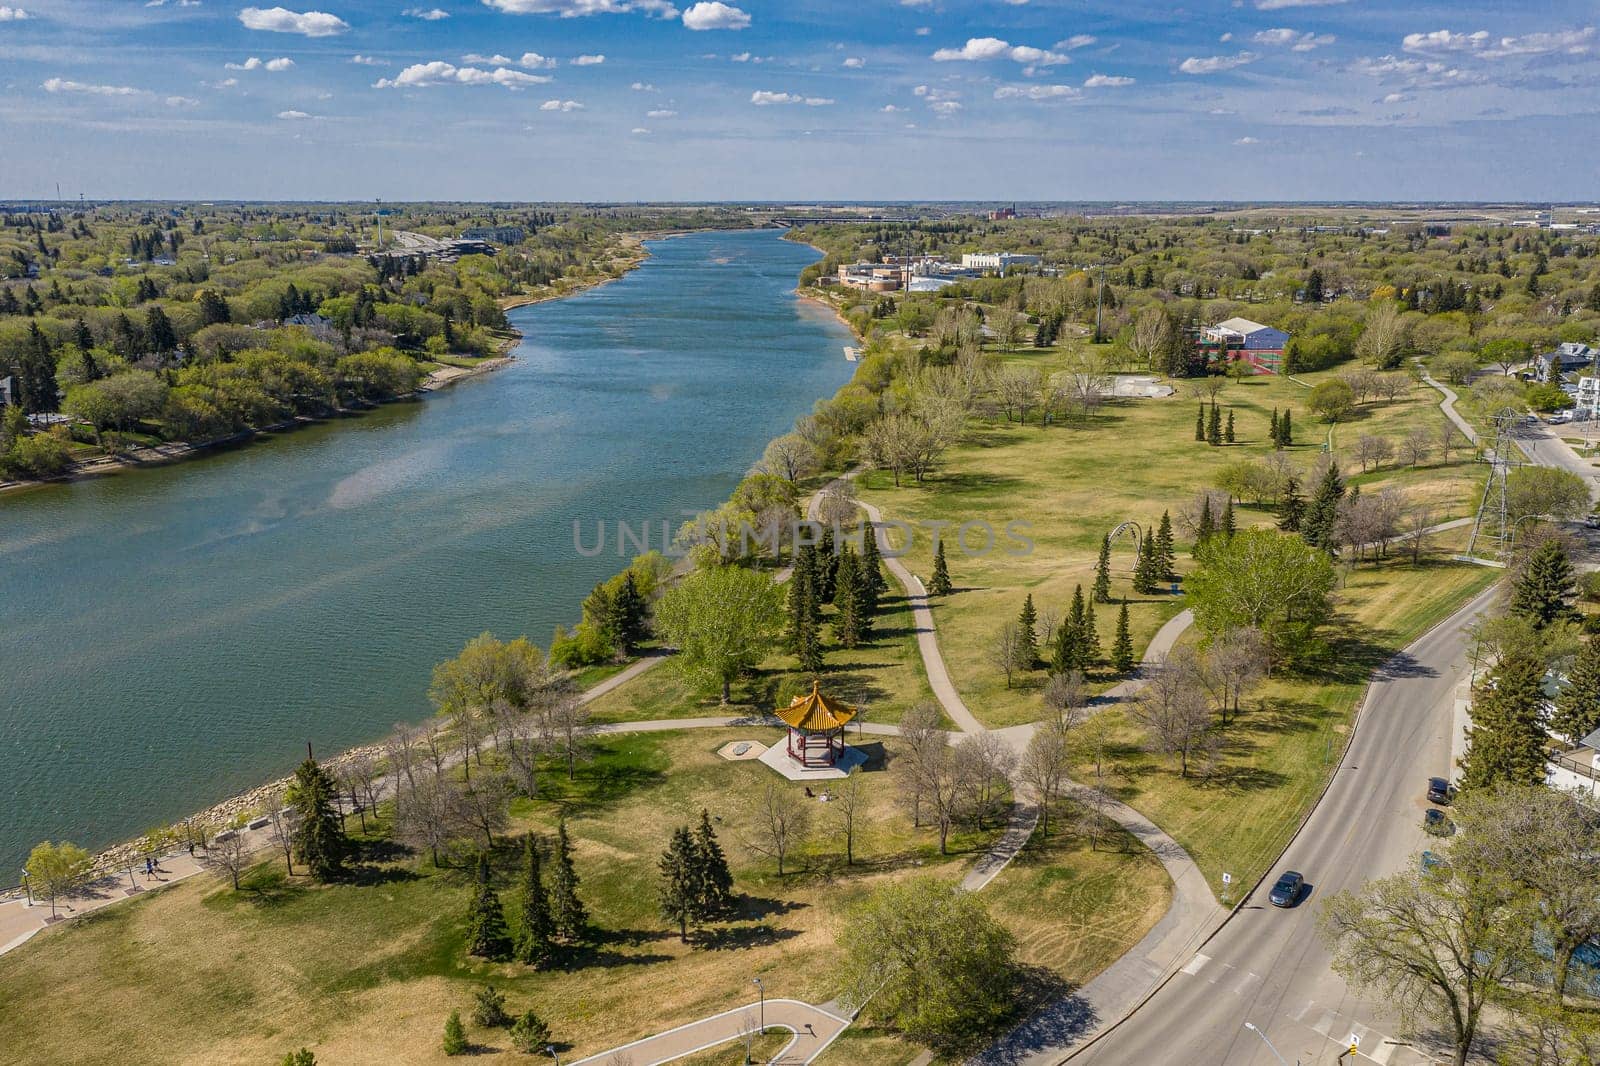 Victoria Park is located in the Riversdale neighborhood of Saskatoon.